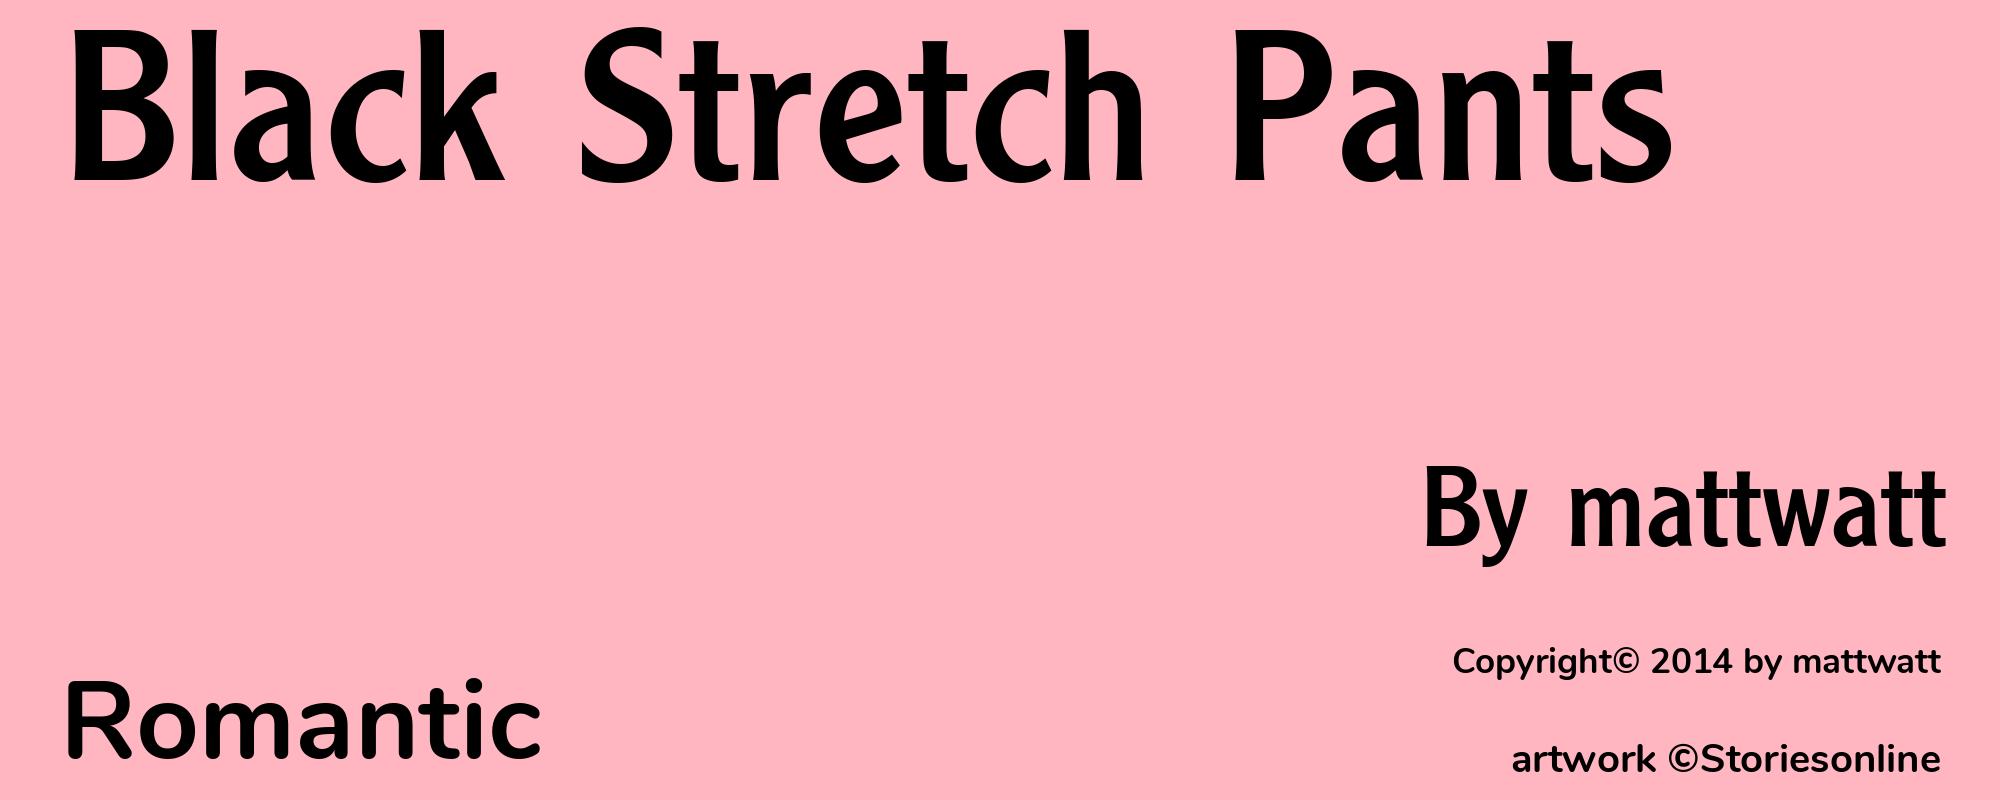 Black Stretch Pants - Cover